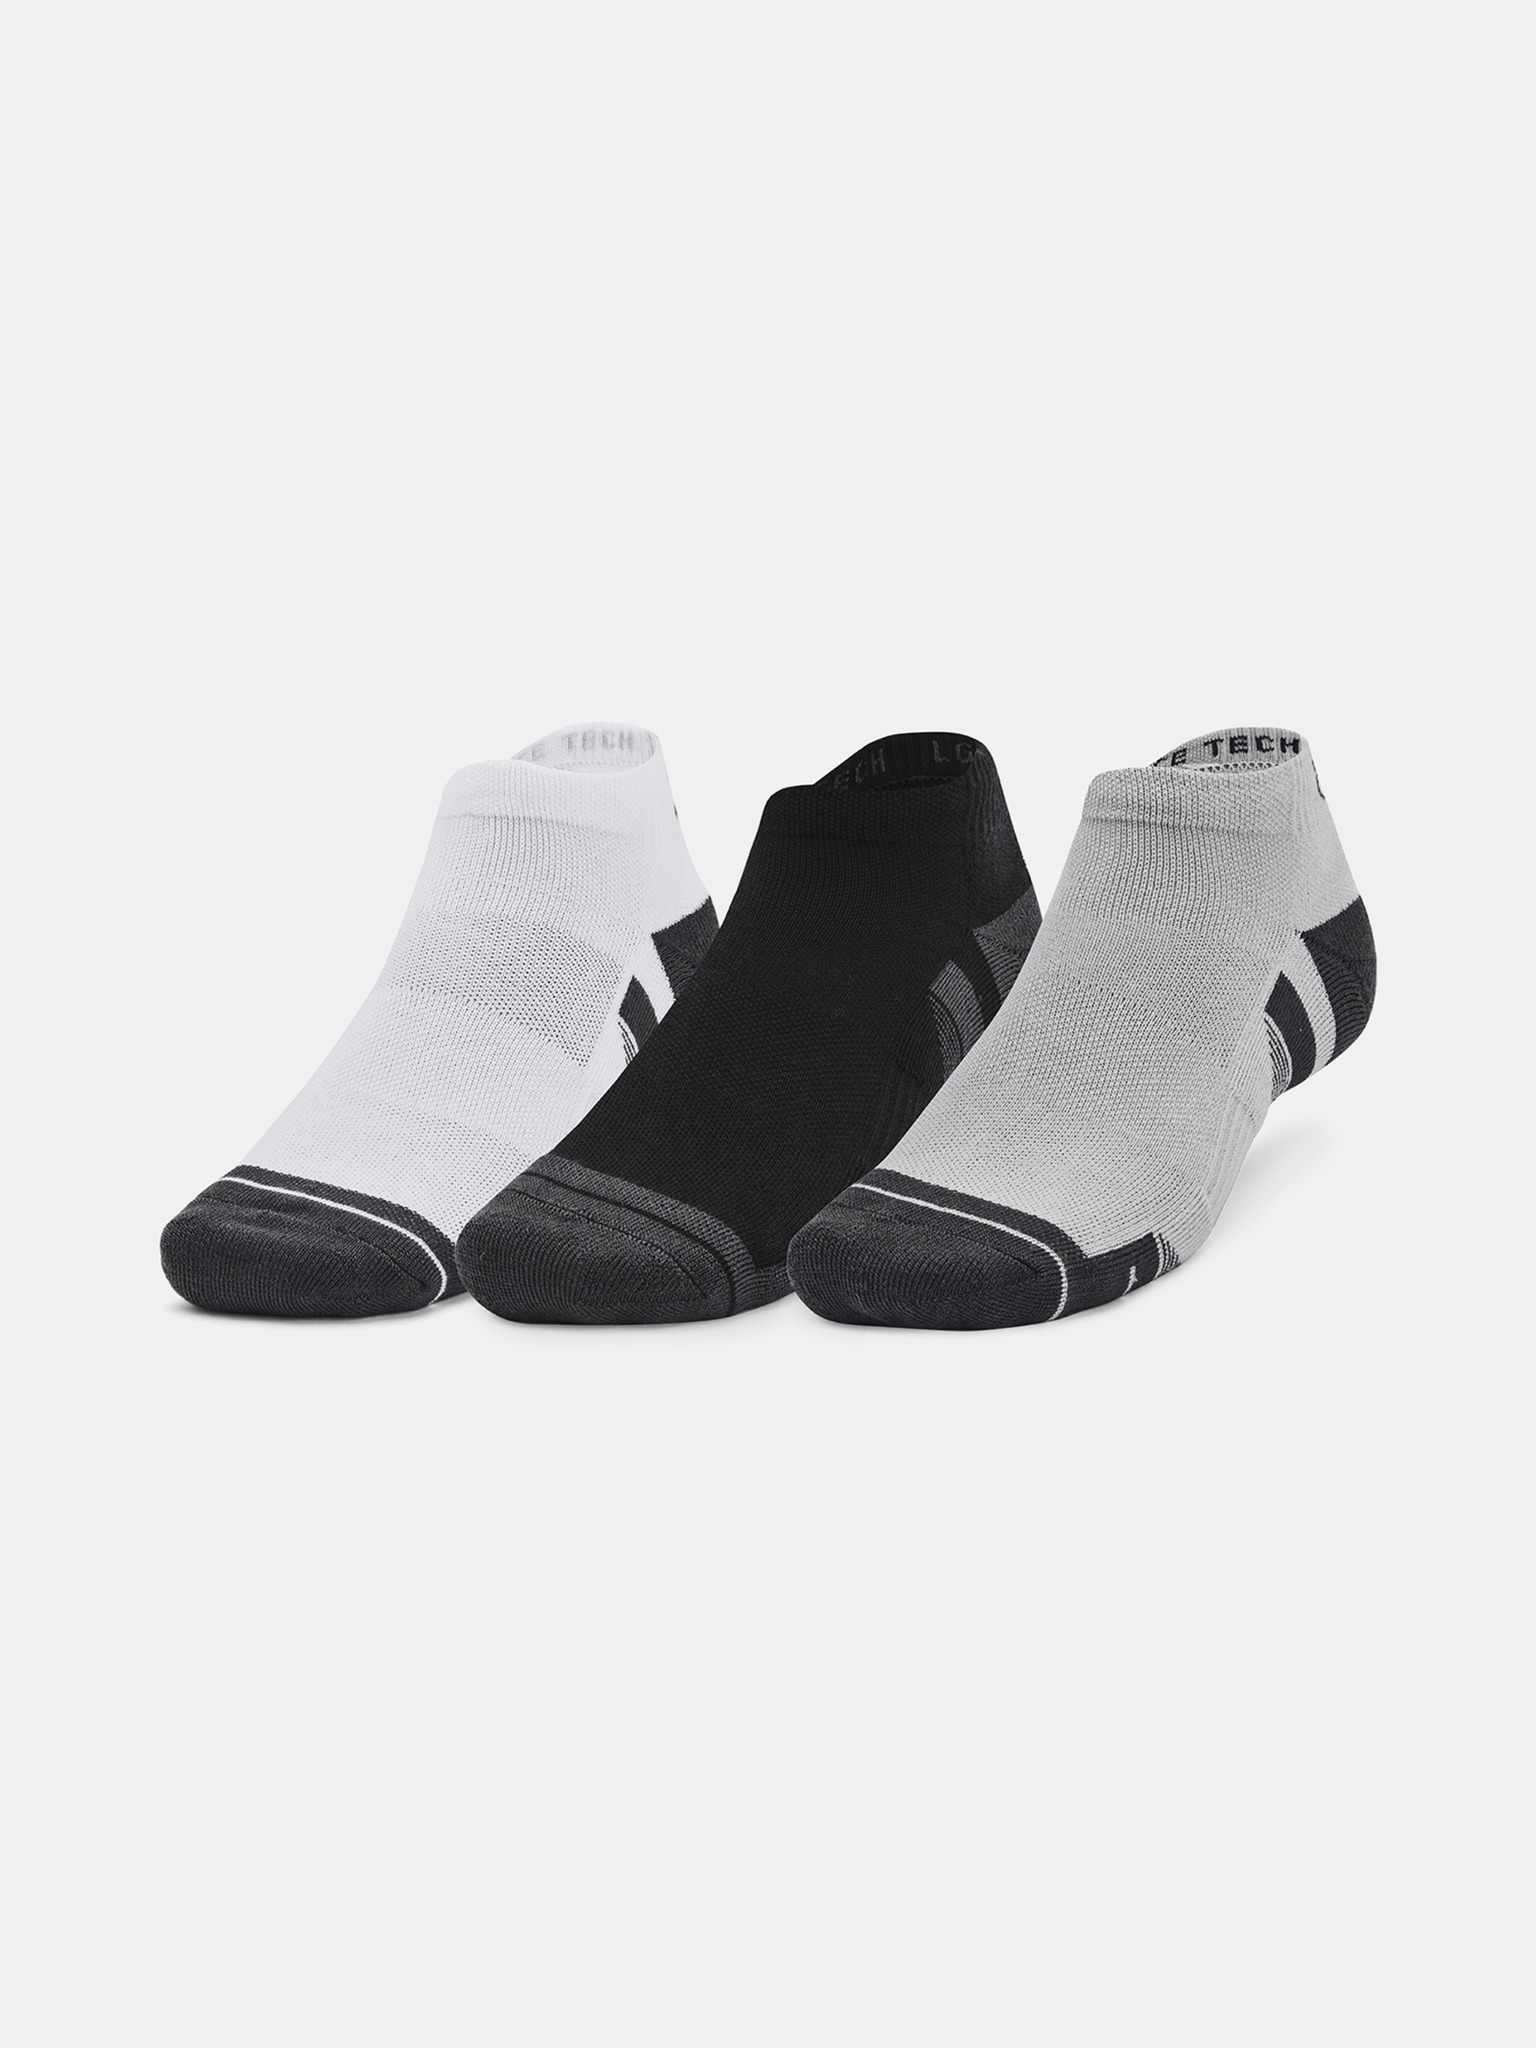 Under Armour Unisex Performance Cotton 3-Pack Quarter Socks (White